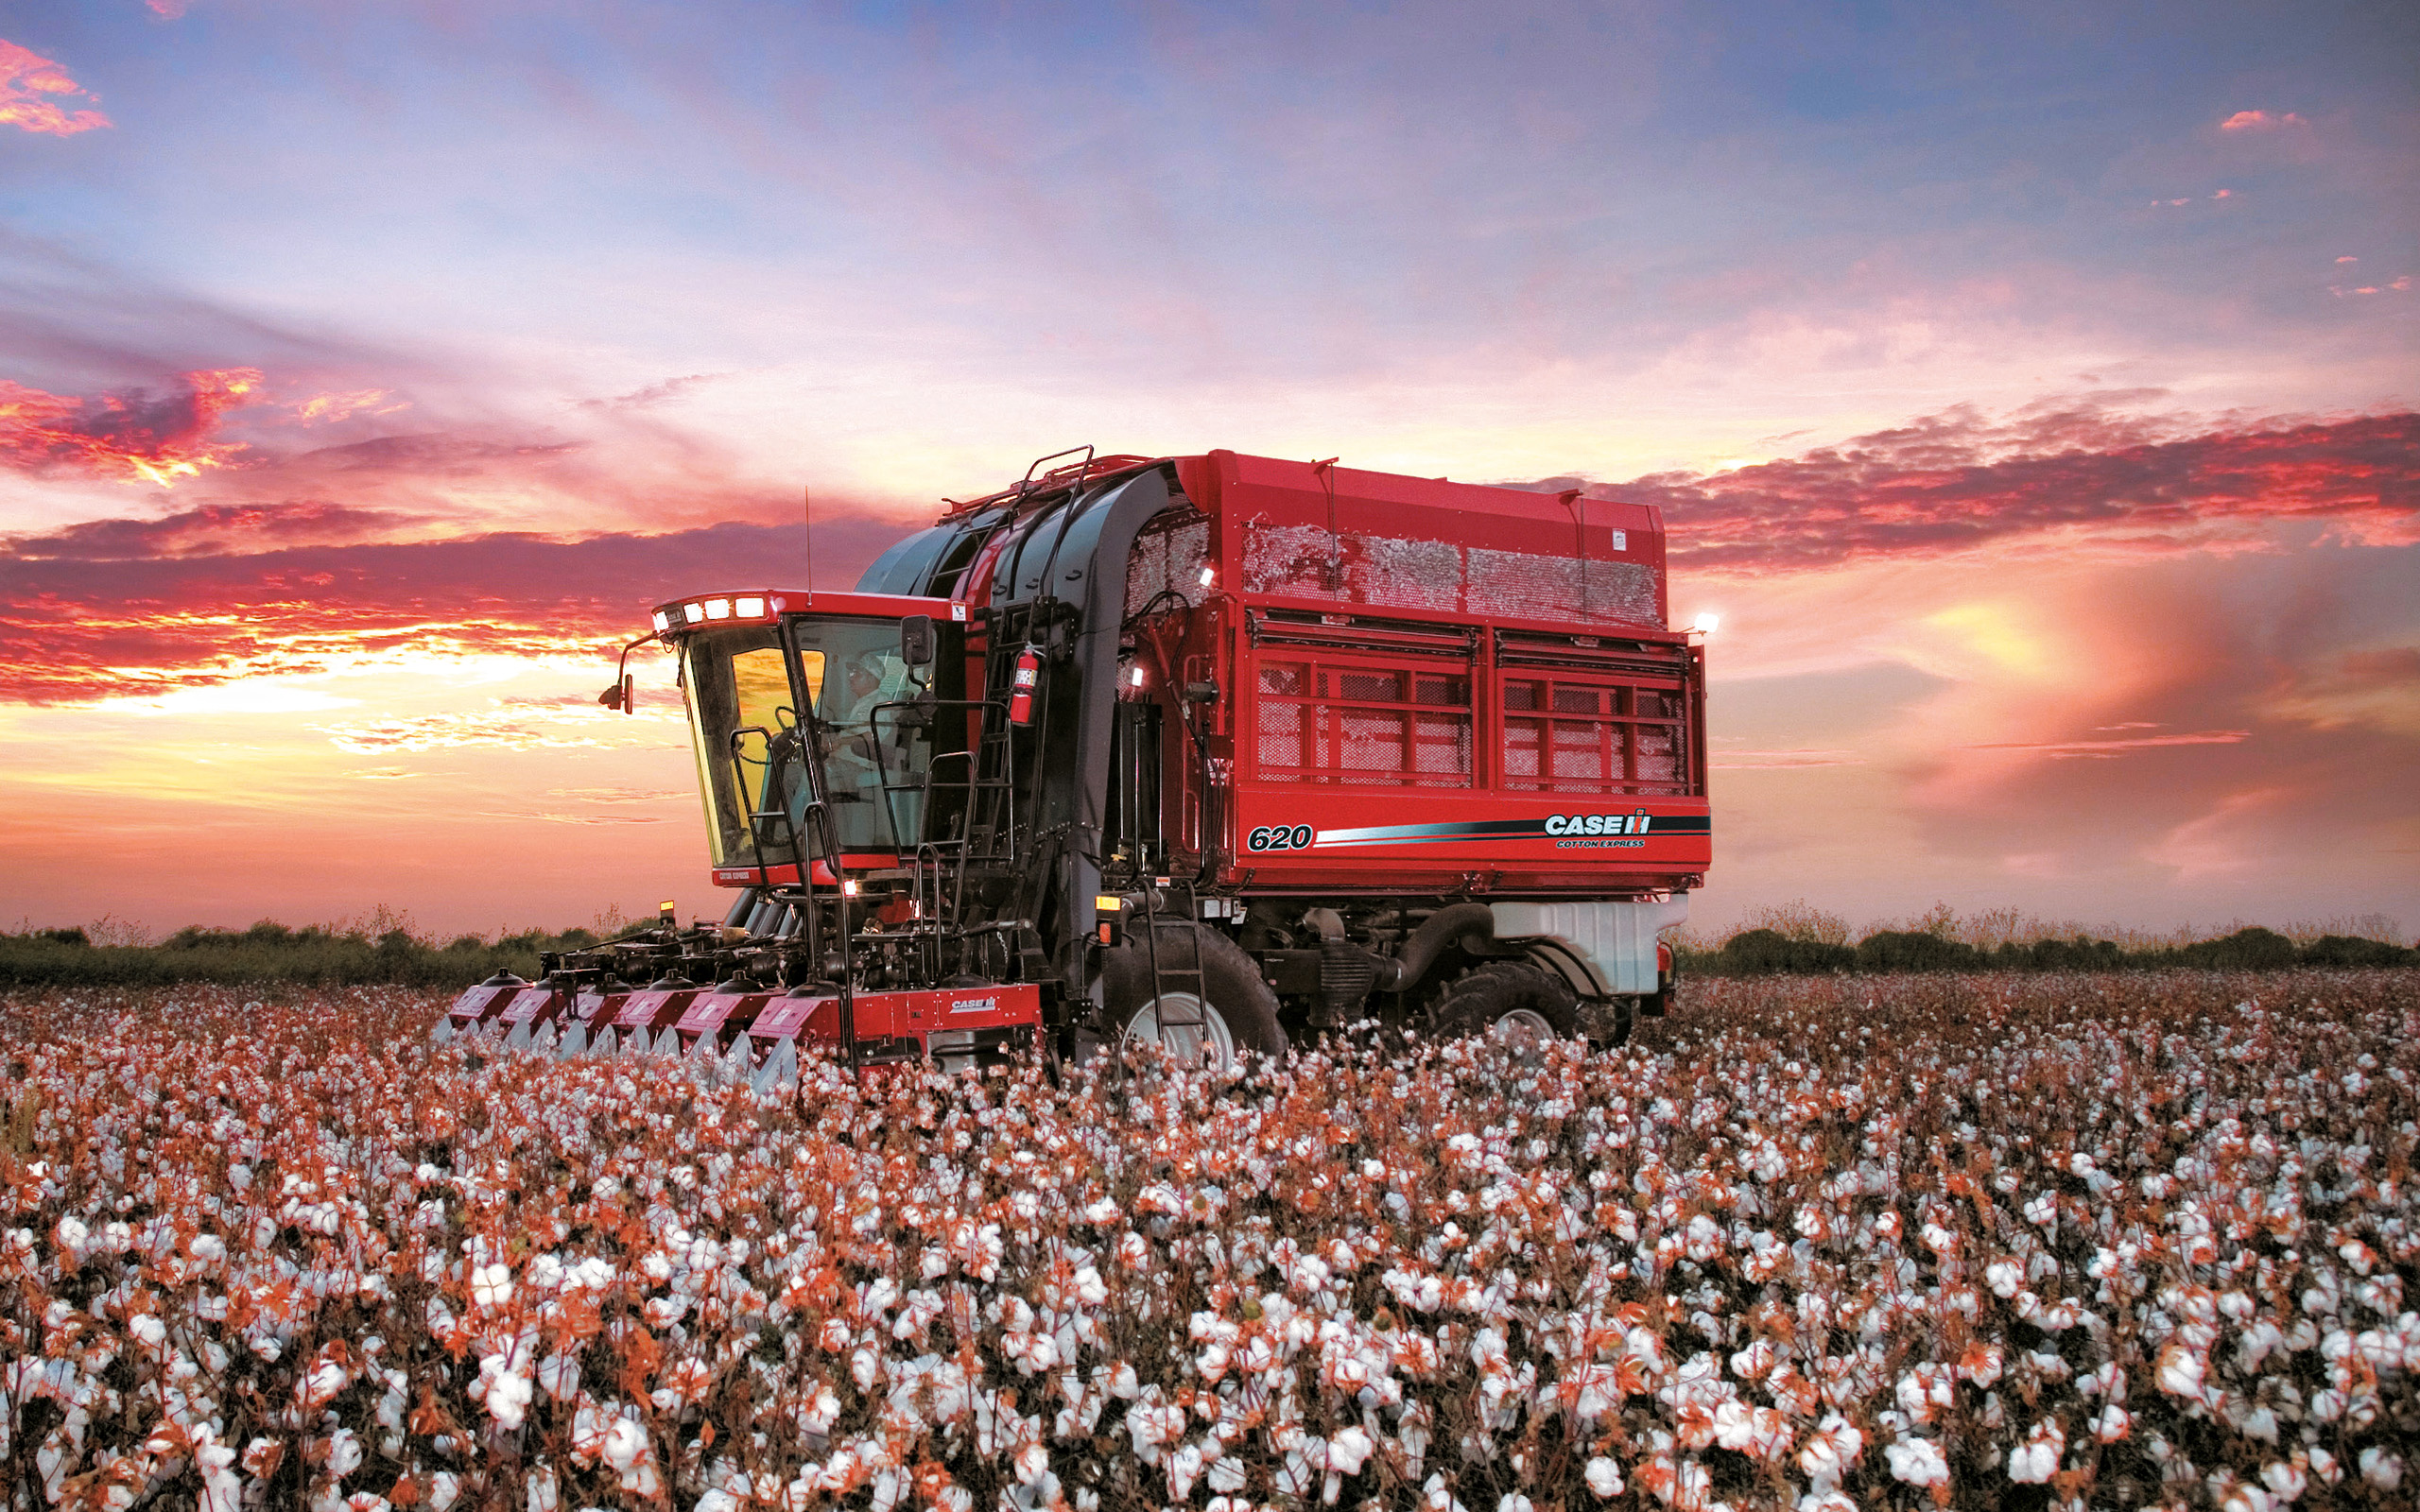 Download wallpaper Case IH Cotton Express, cotton harvest